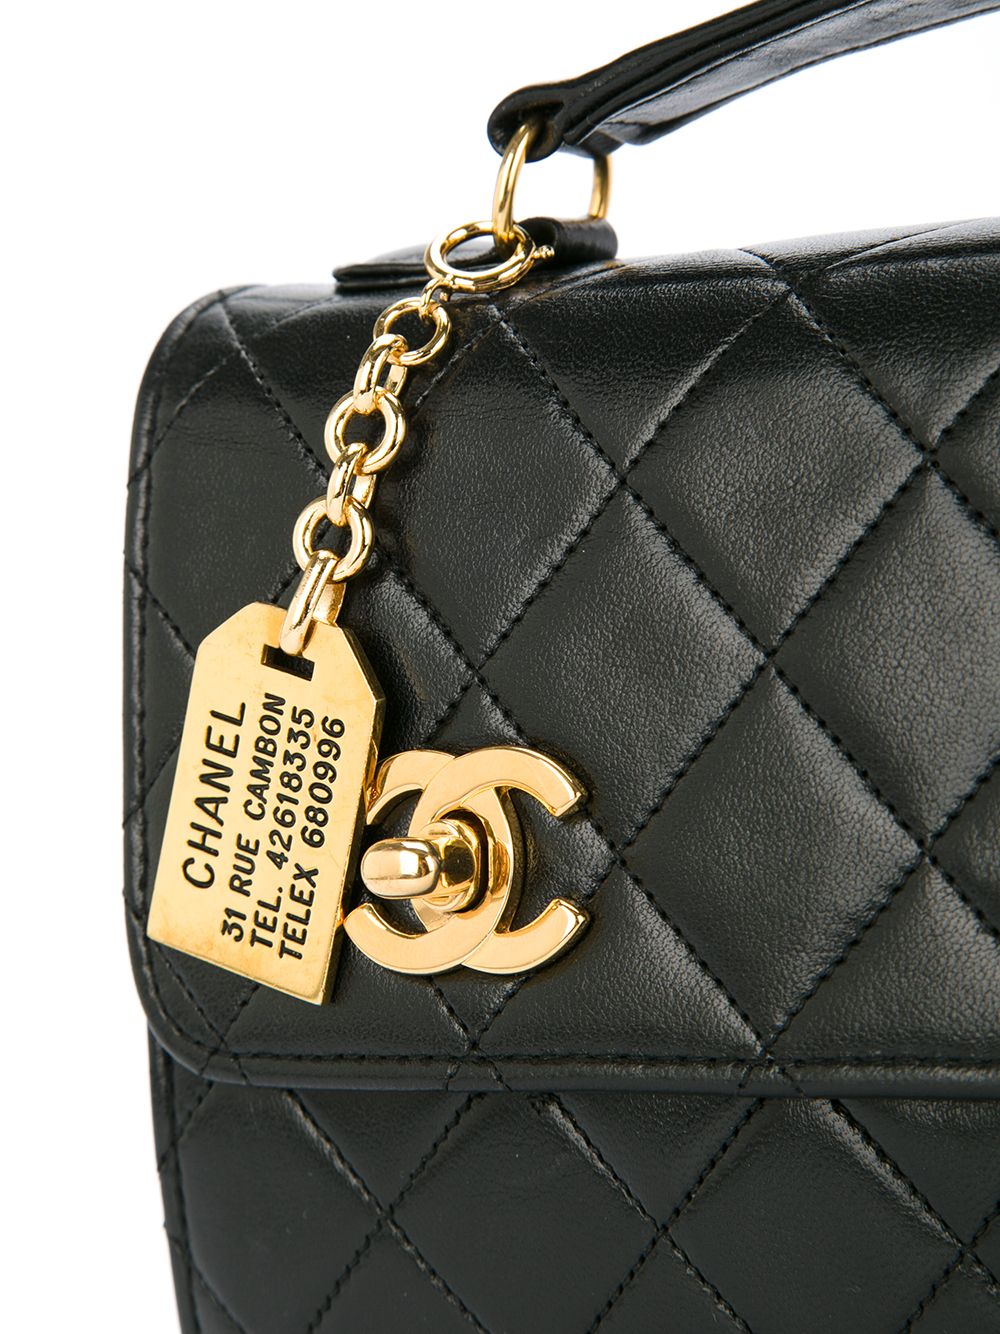 Chanel Turnlock - 318 For Sale on 1stDibs  chanel turn lock design flap bag,  chanel double turn lock, chanel turnlock earrings